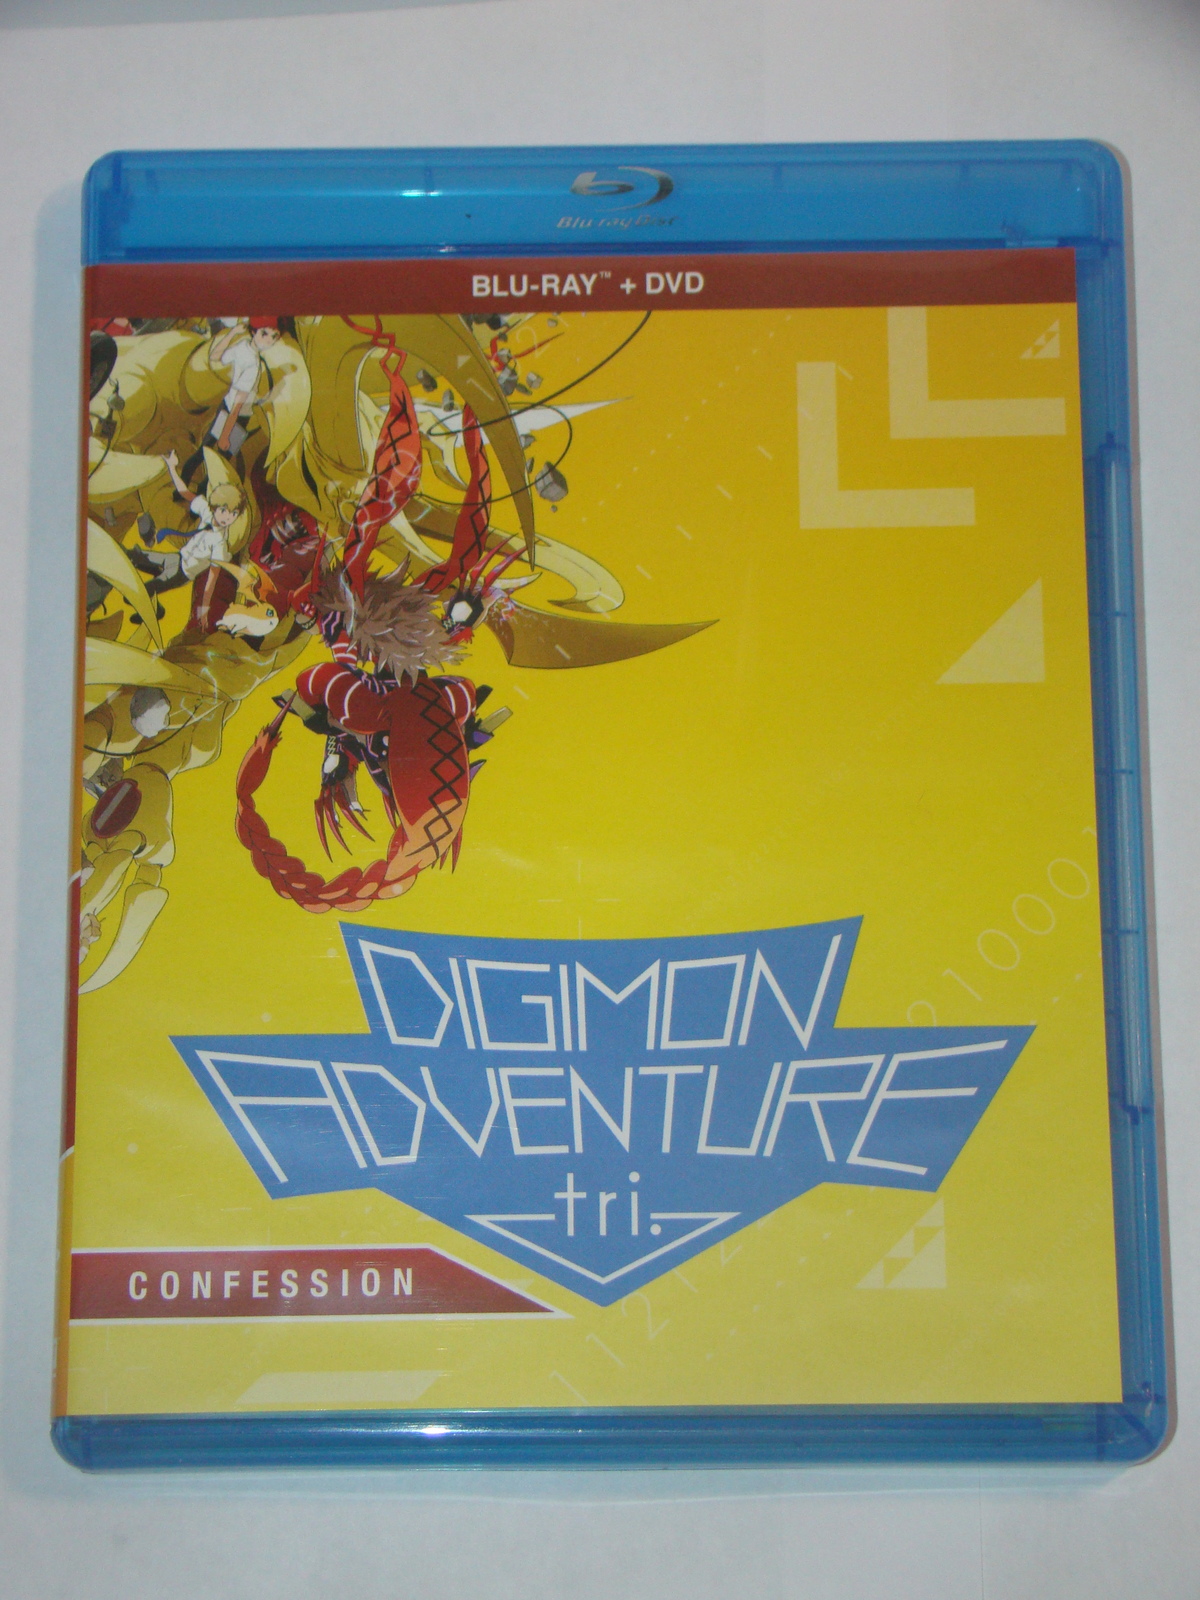 Primary image for DIGIMON ADVENTURE tri. CONFESSION - BLU-RAY + DVD